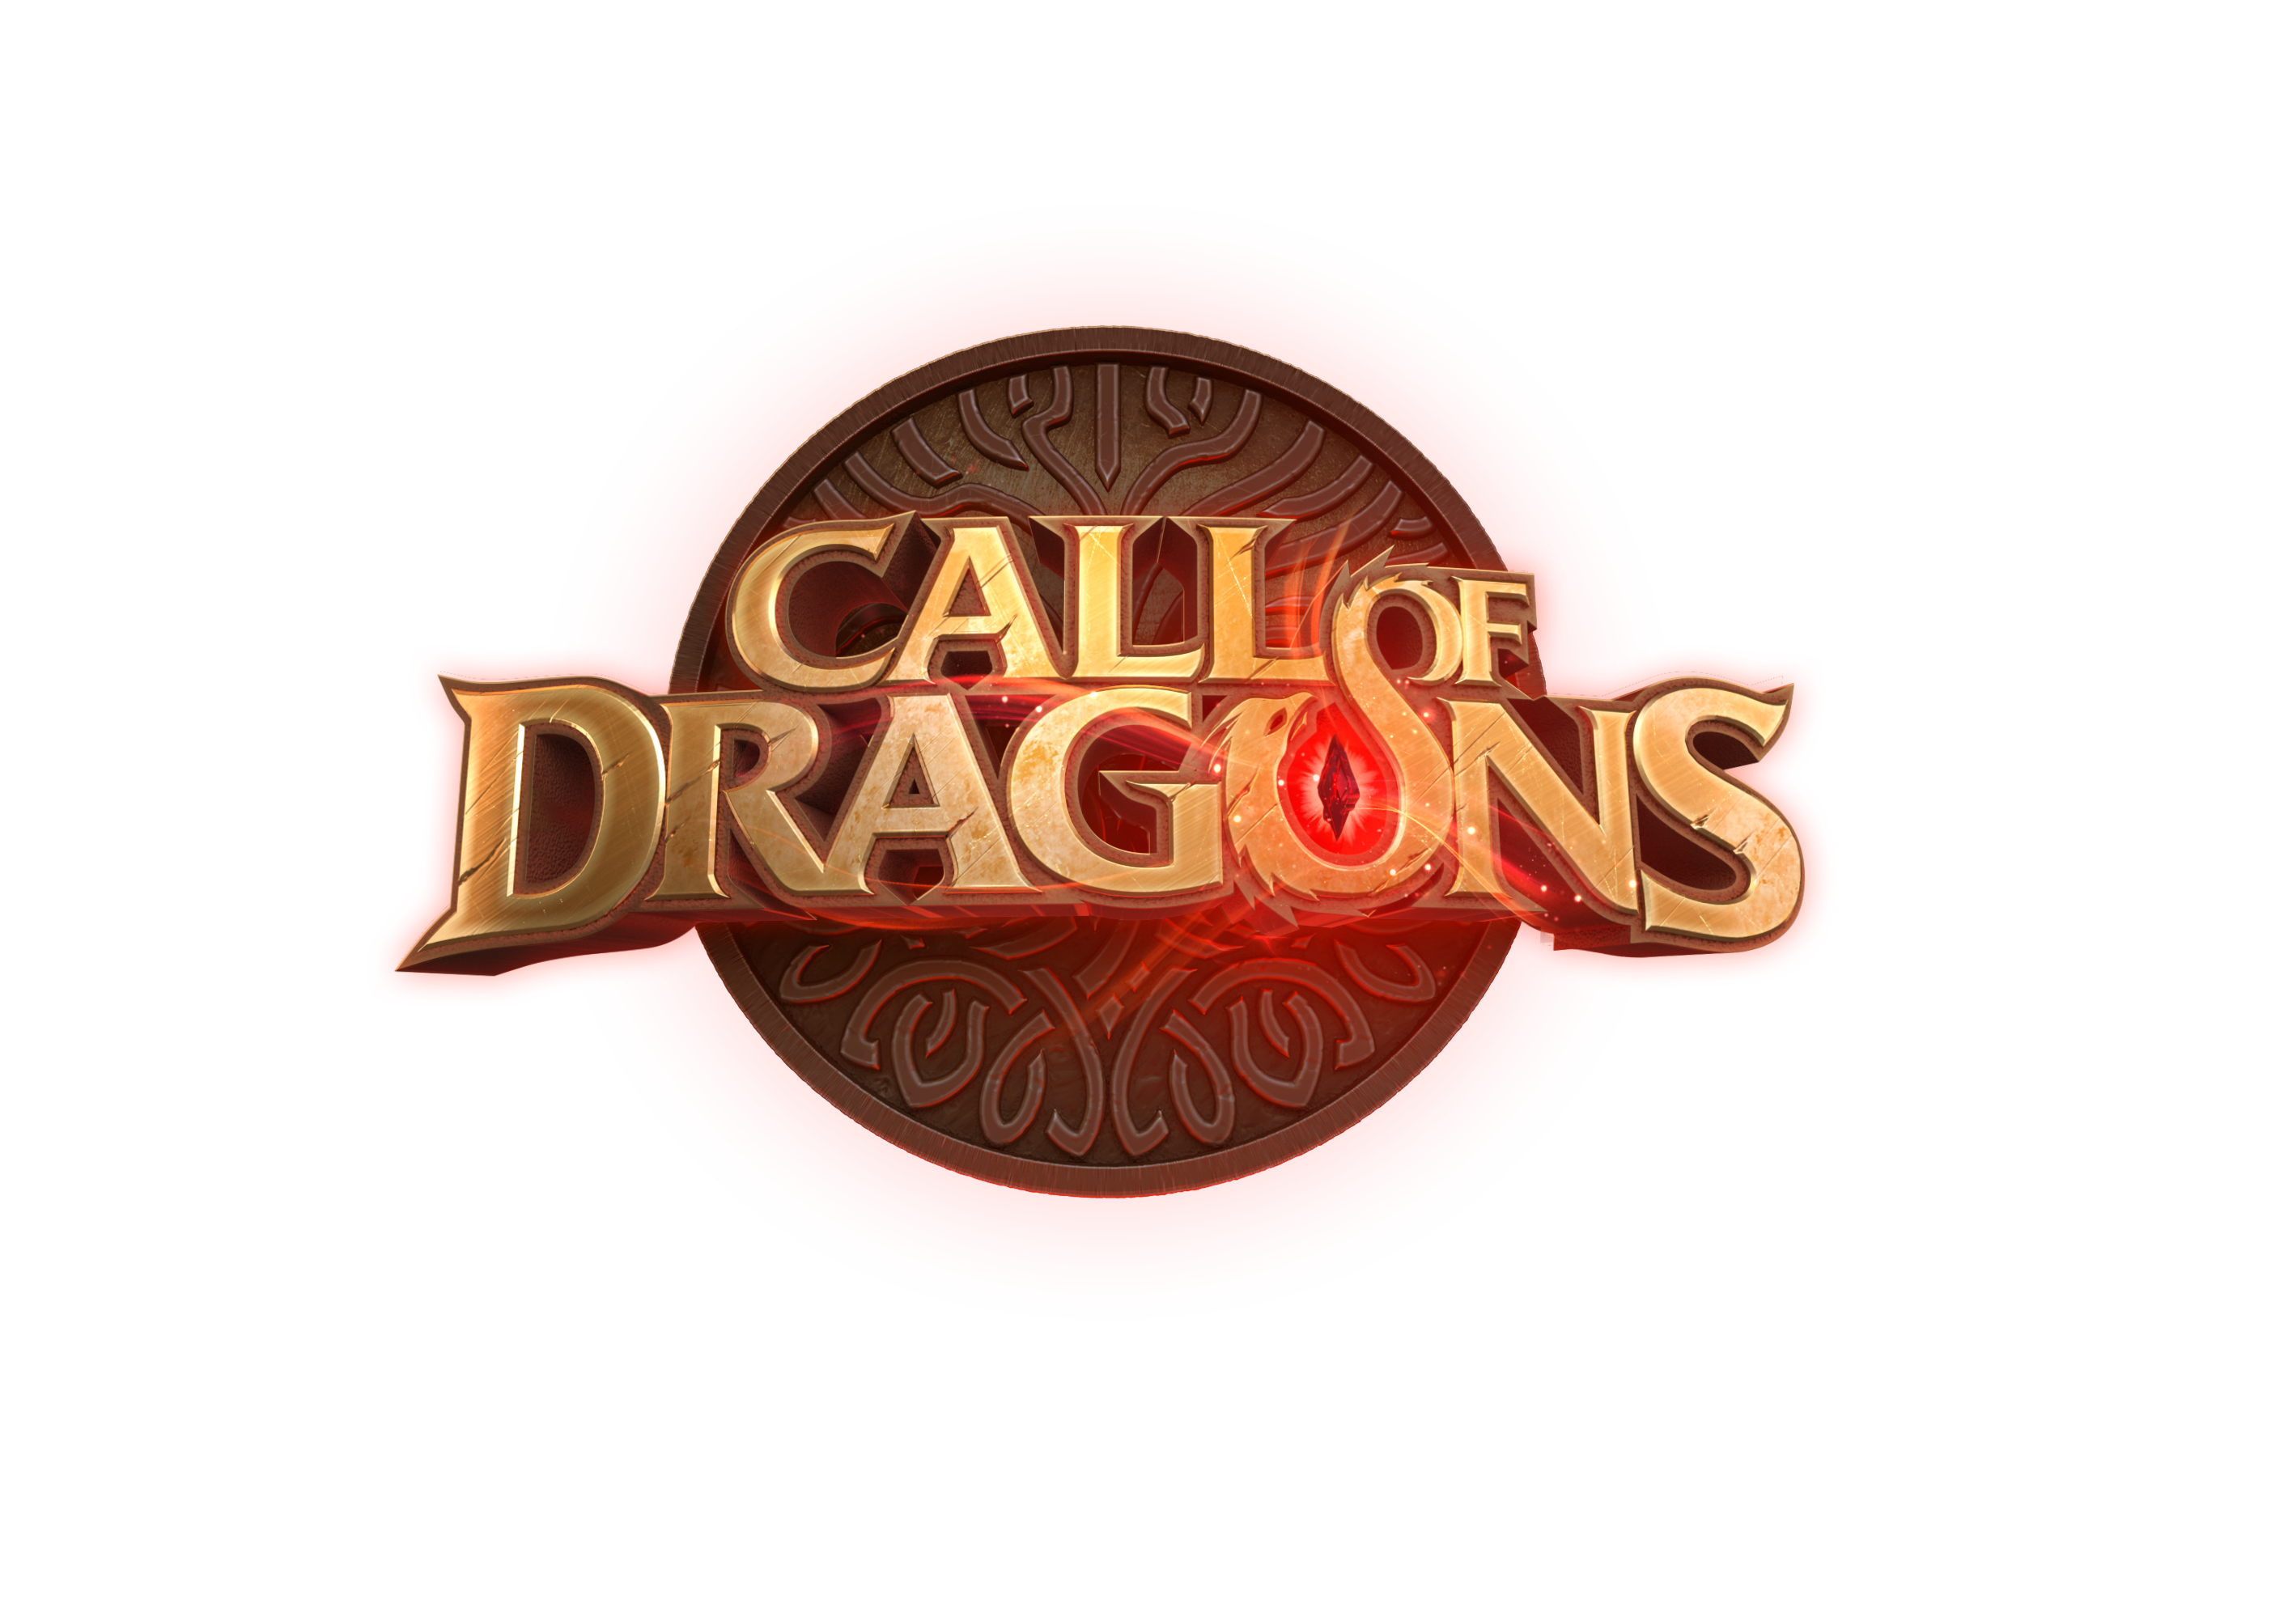 Call of Dragons logo.